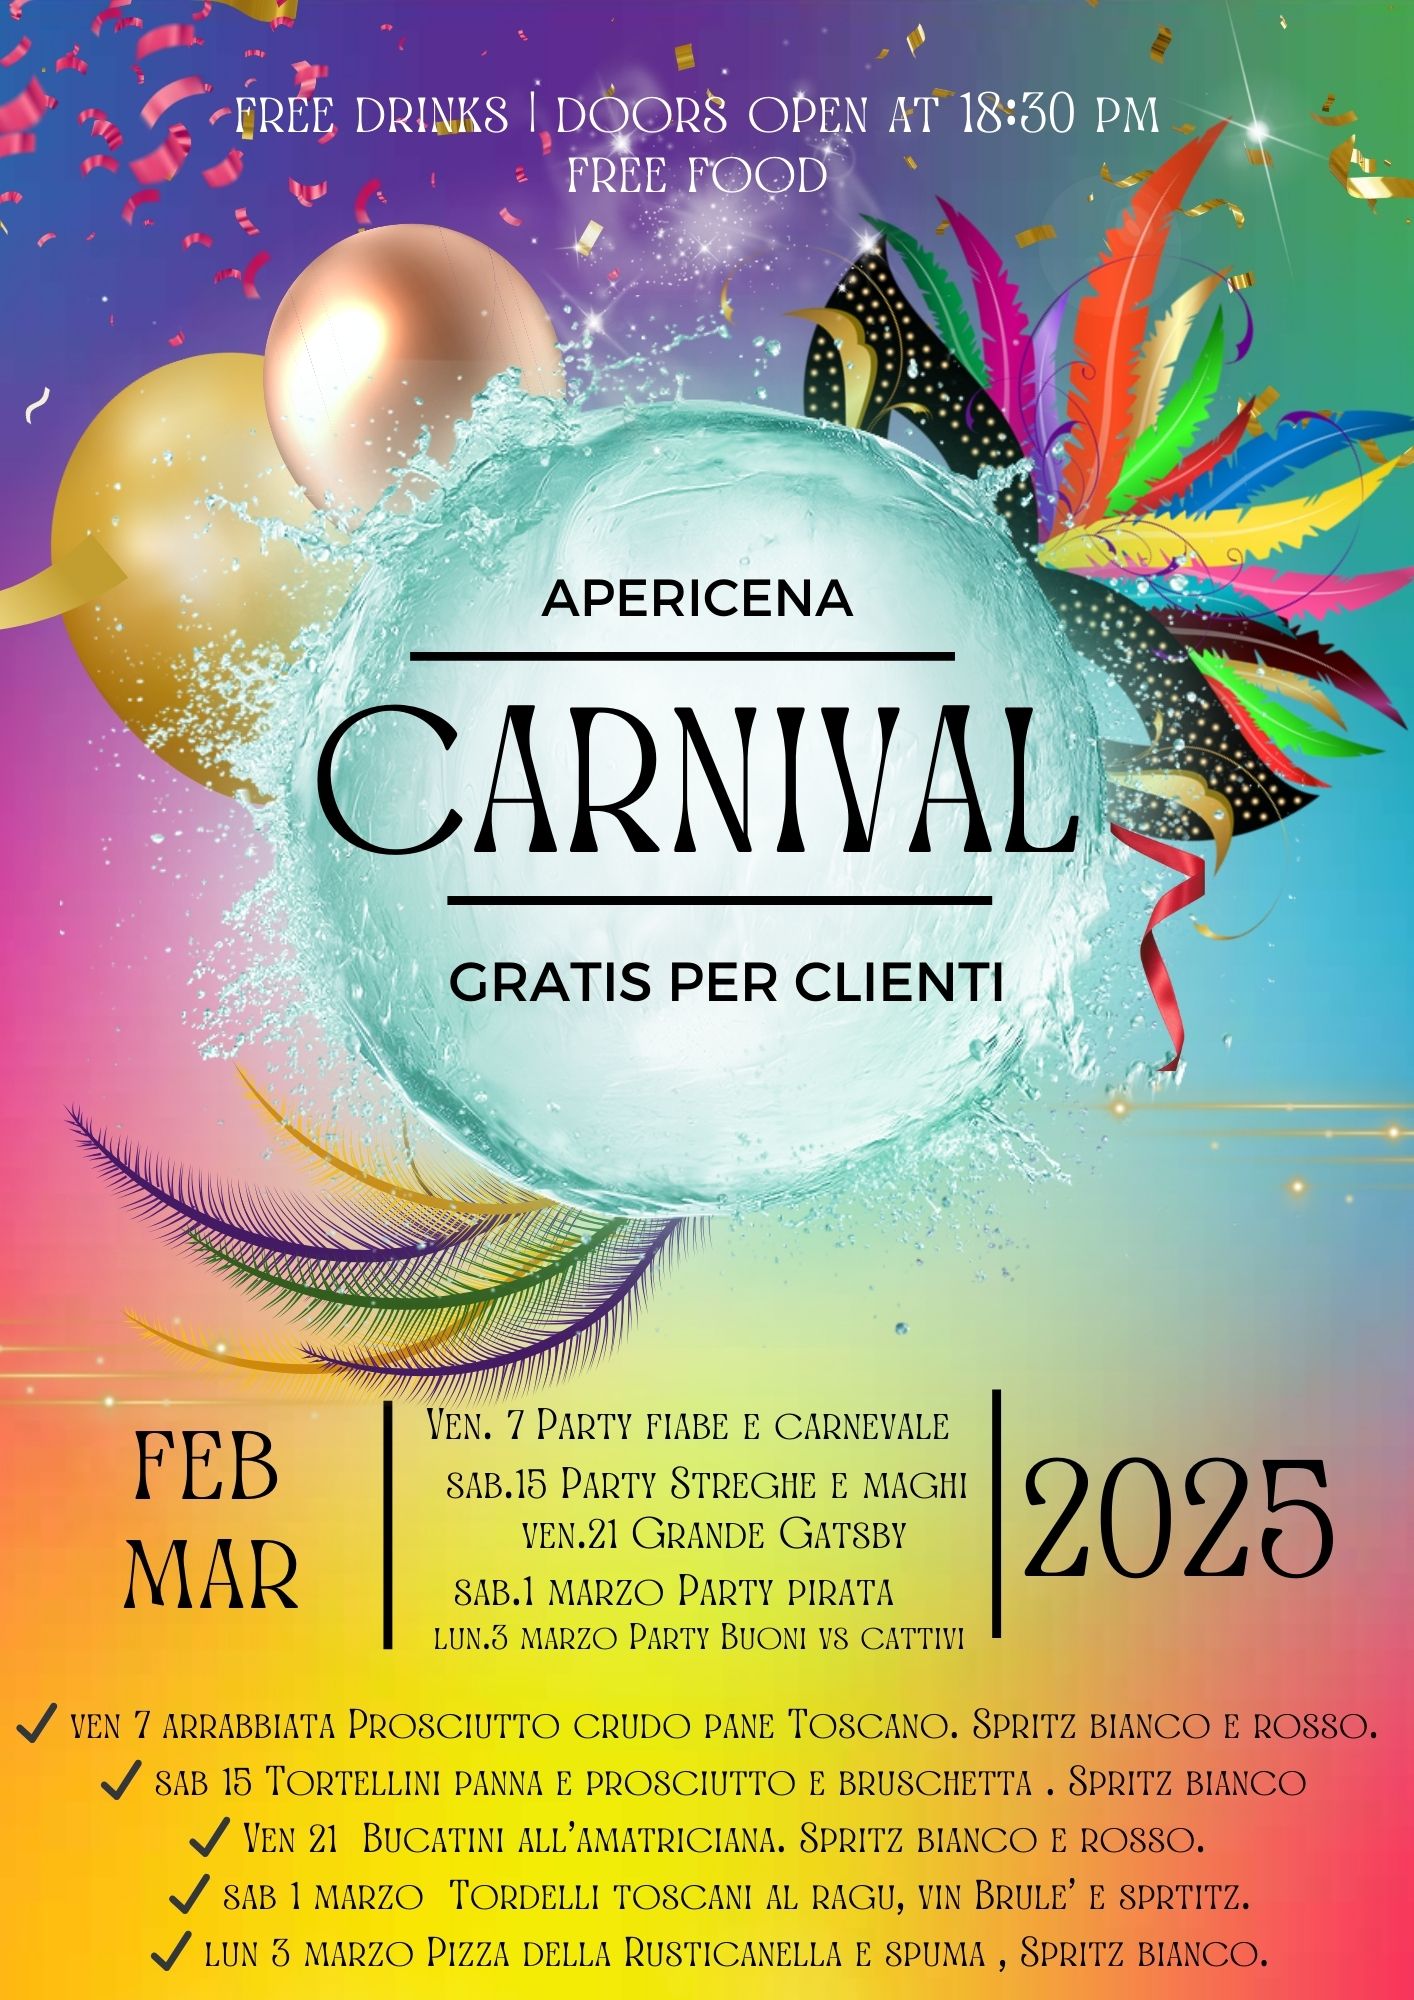 Apericena Party Carnevale Viareggio 2024